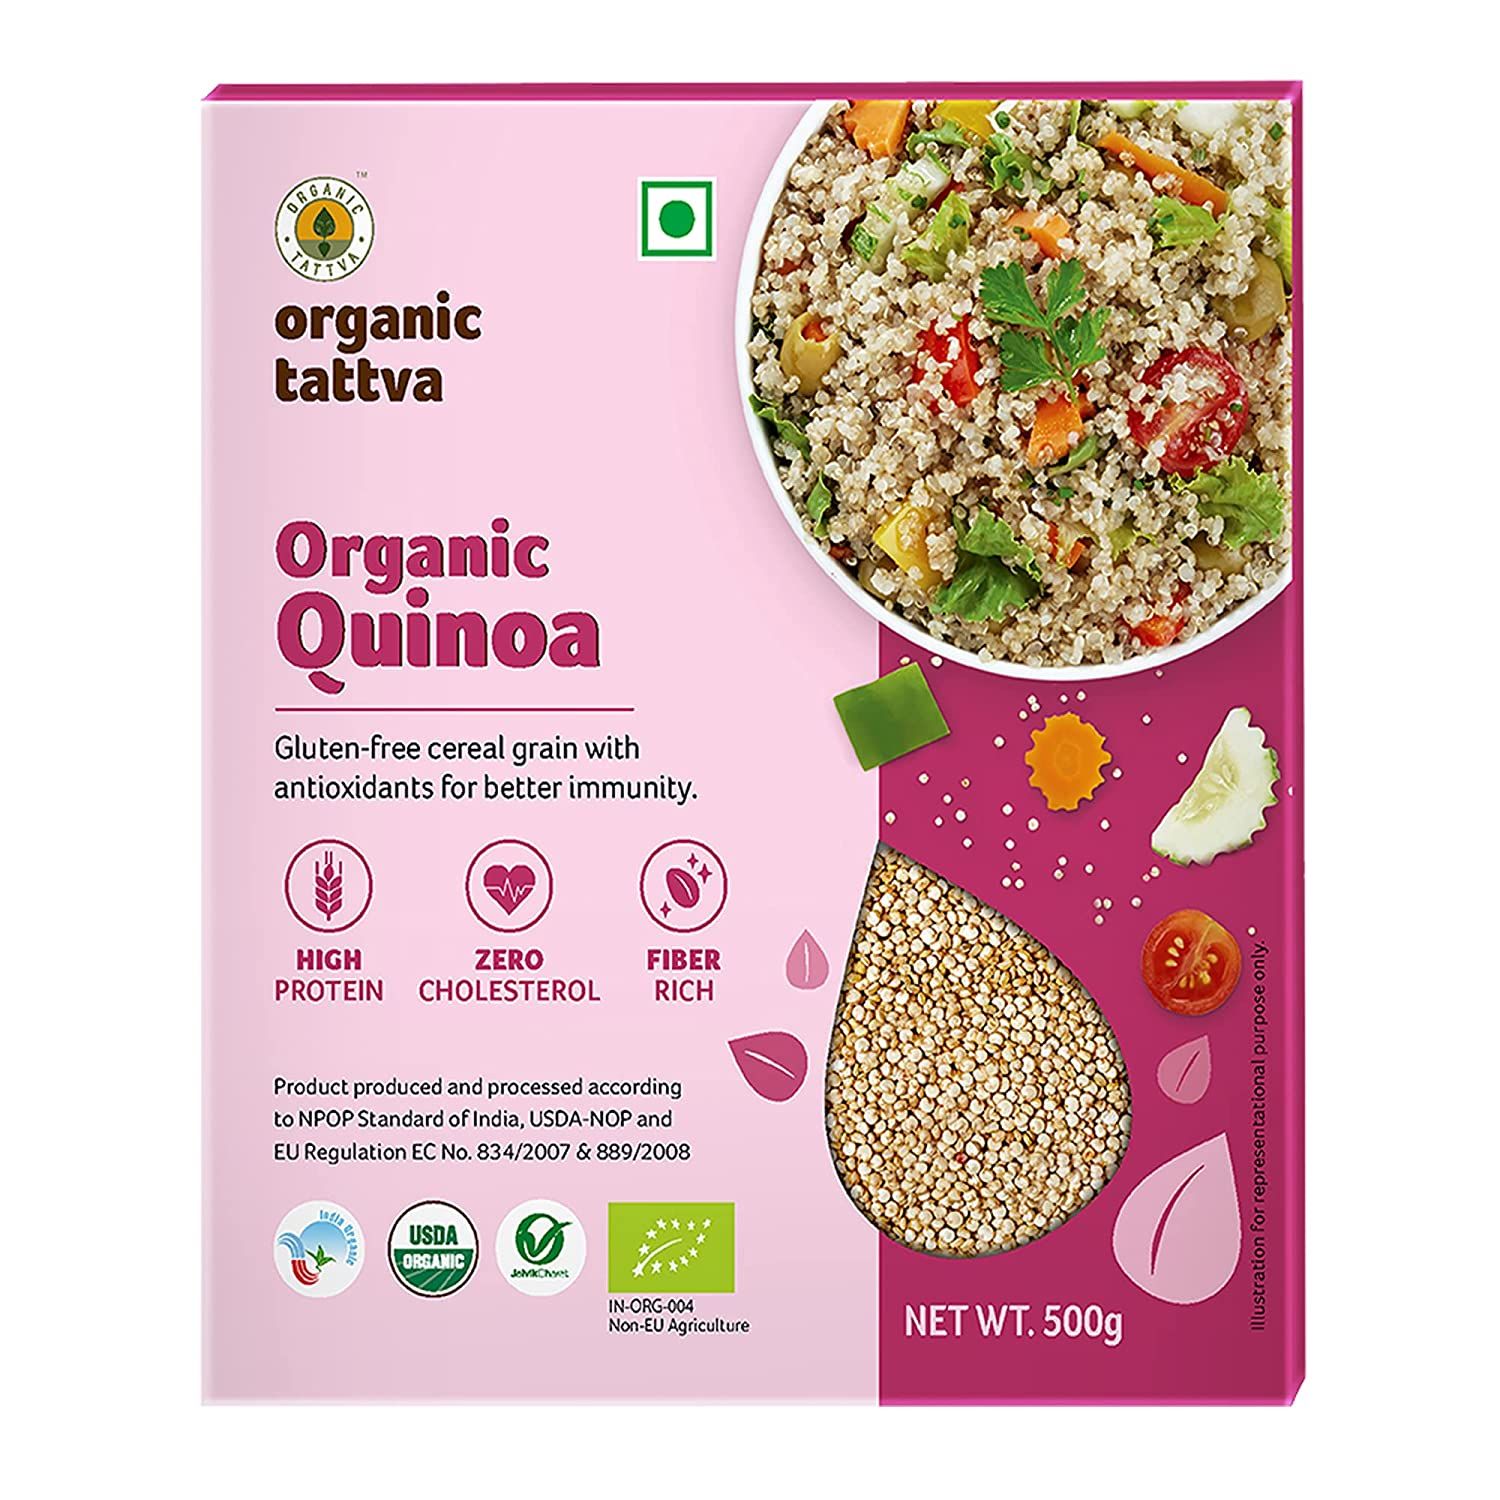 Organic Tattva Quinoa Image